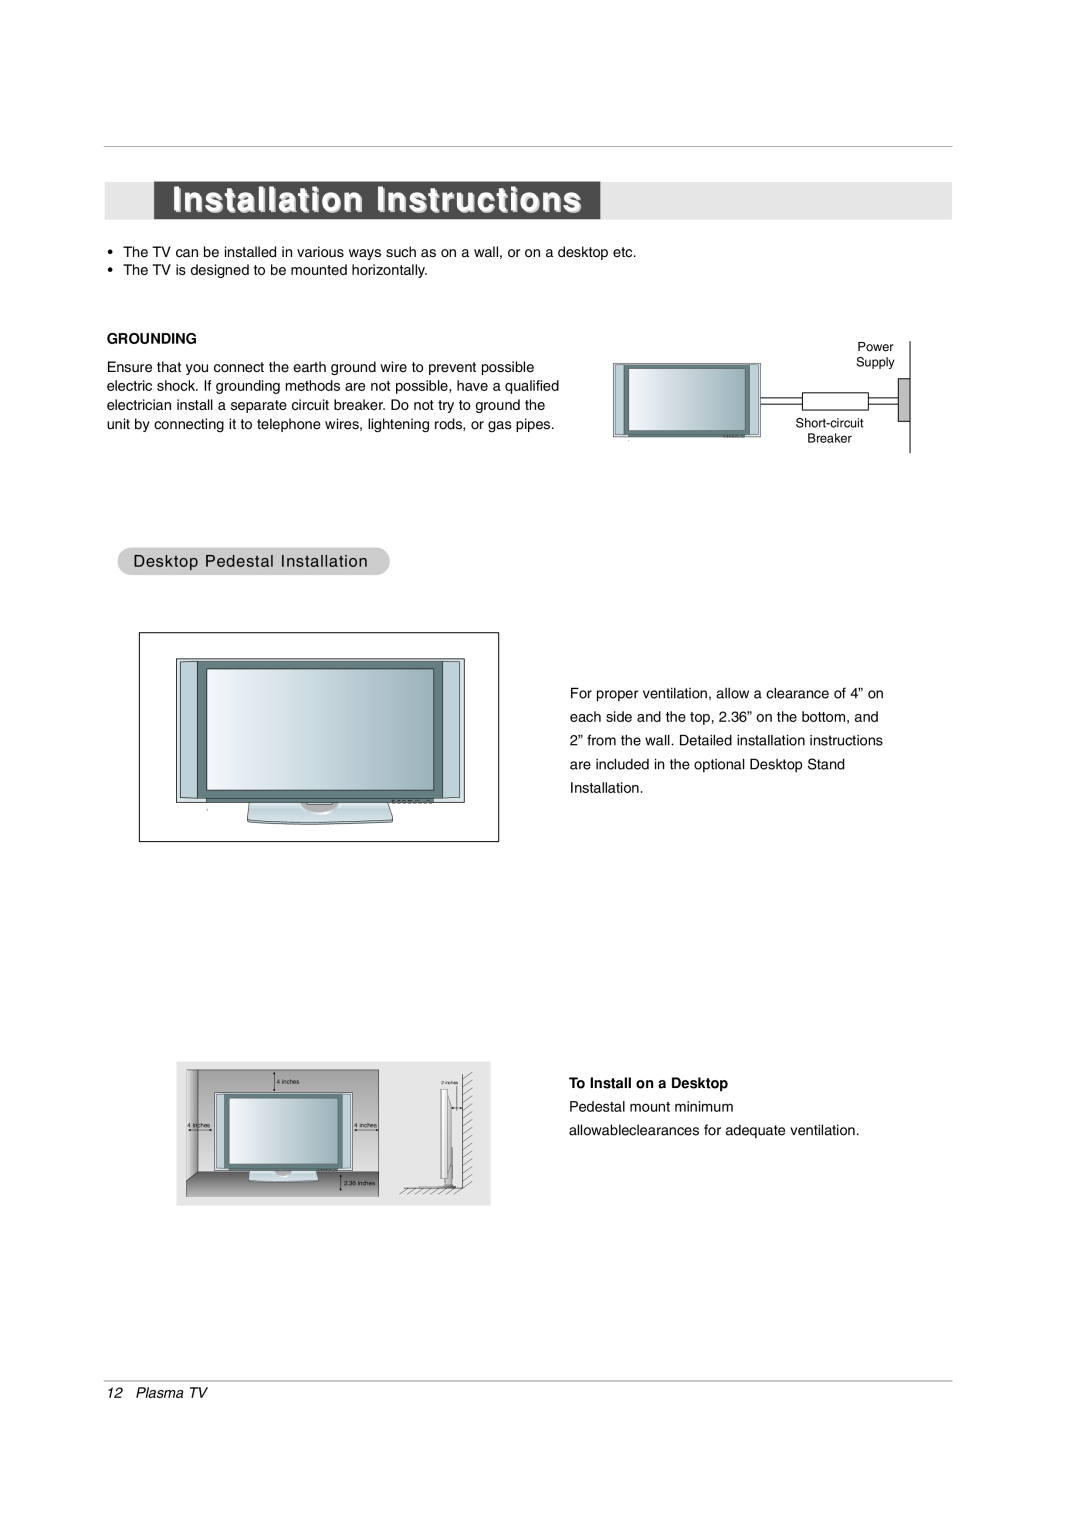 LG Electronics 42PX7DC Installation Instructions, Desktop Pedestal Installation, Grounding, To Install on a Desktop 